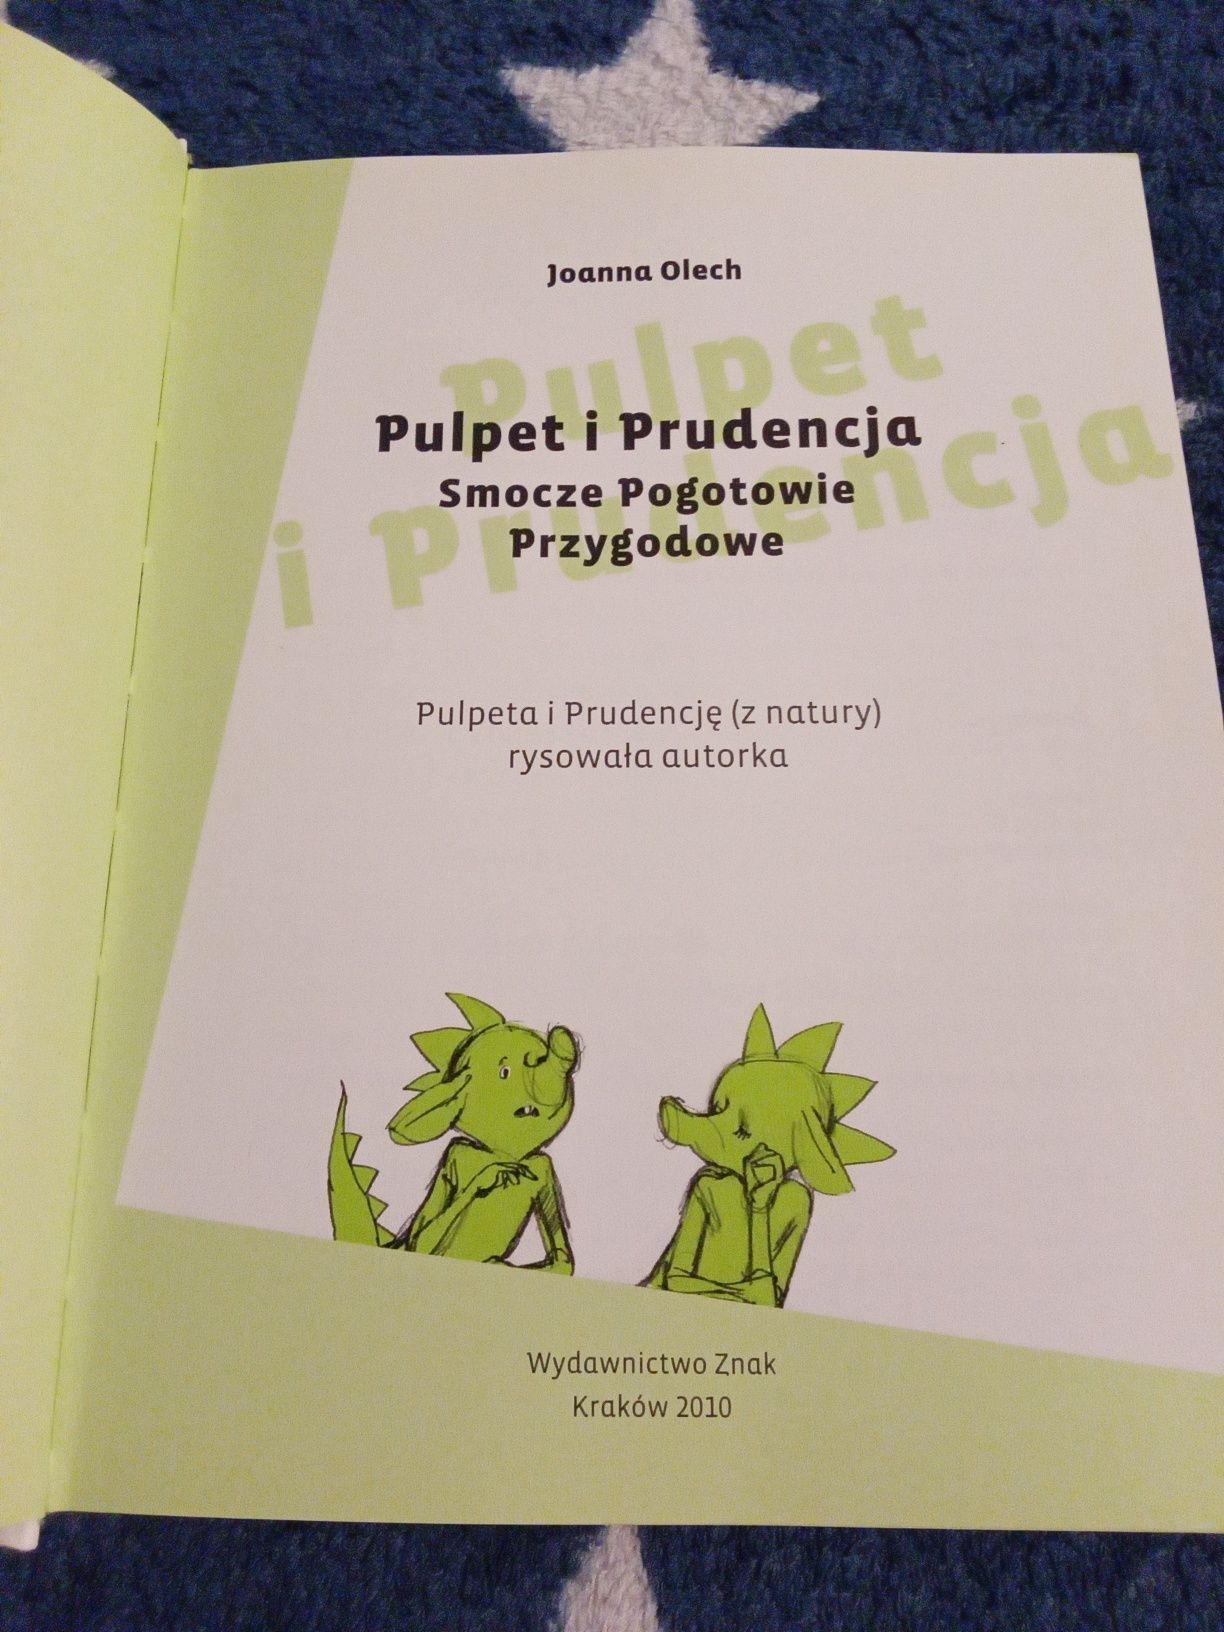 Pulpet i Prudencja. Joanna Olech